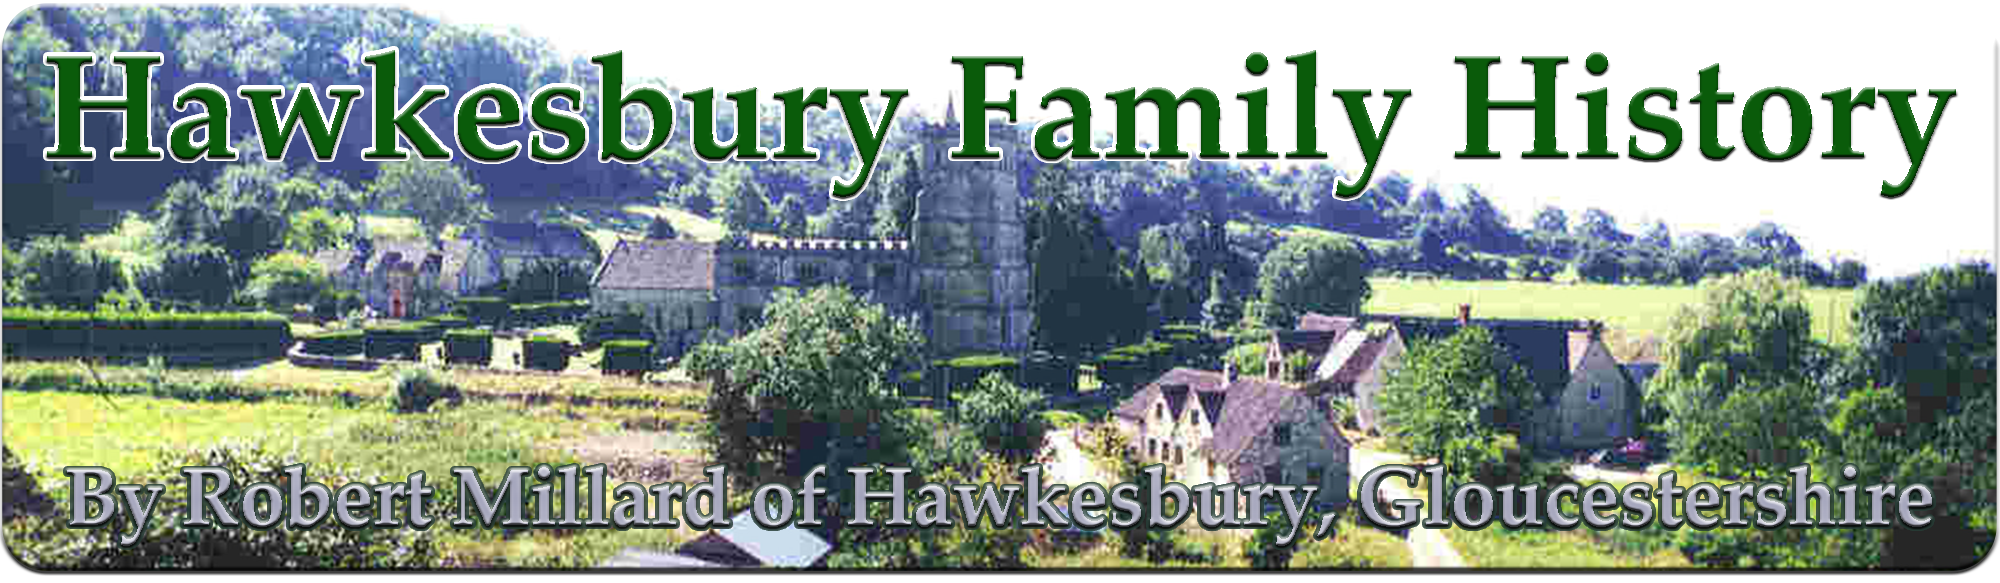 Hawkesbury Family History Header Image